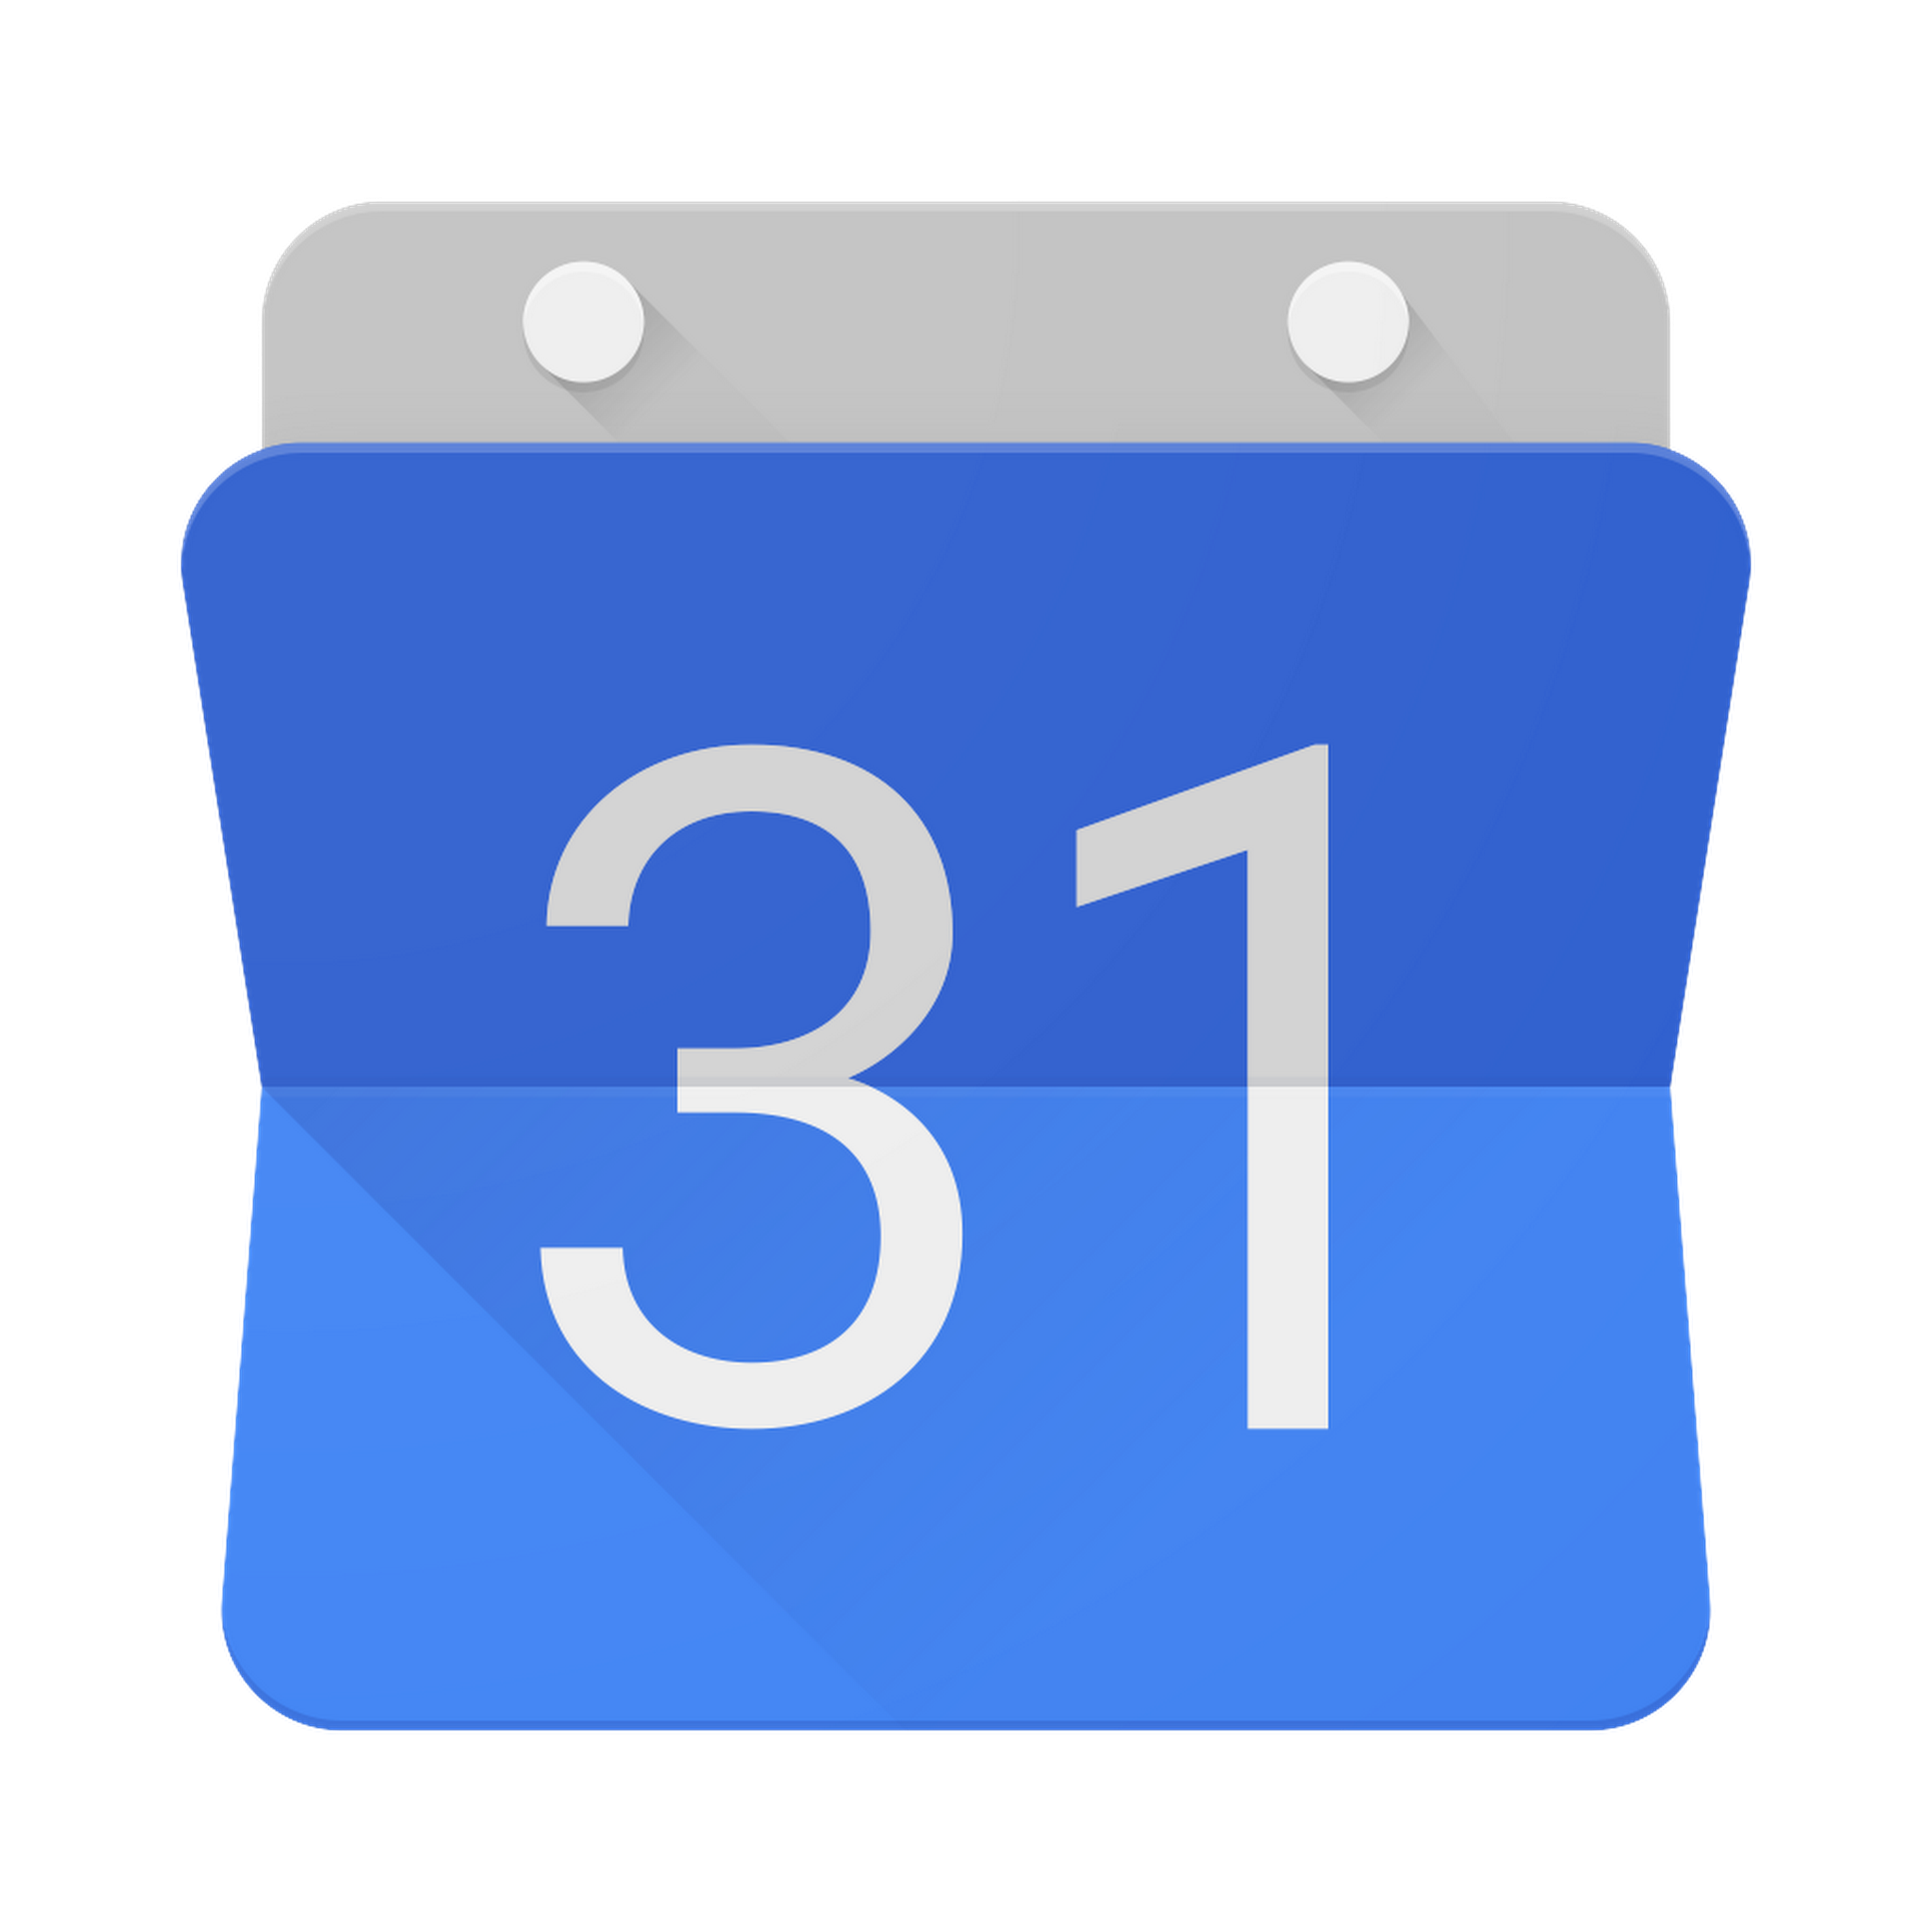 Suite Calendar Google Computer Icons Free Download Image PNG Image